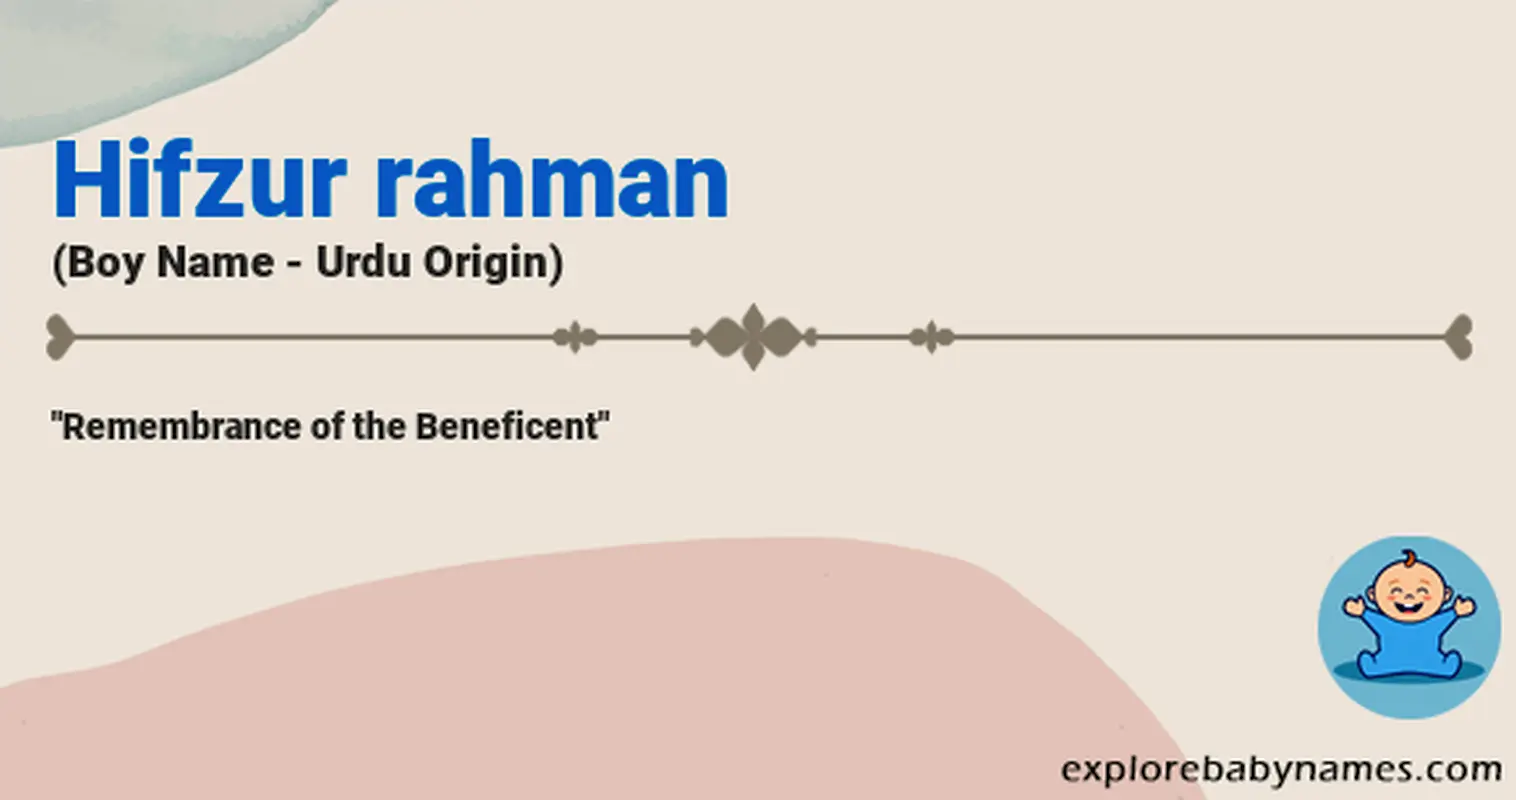 Meaning of Hifzur rahman